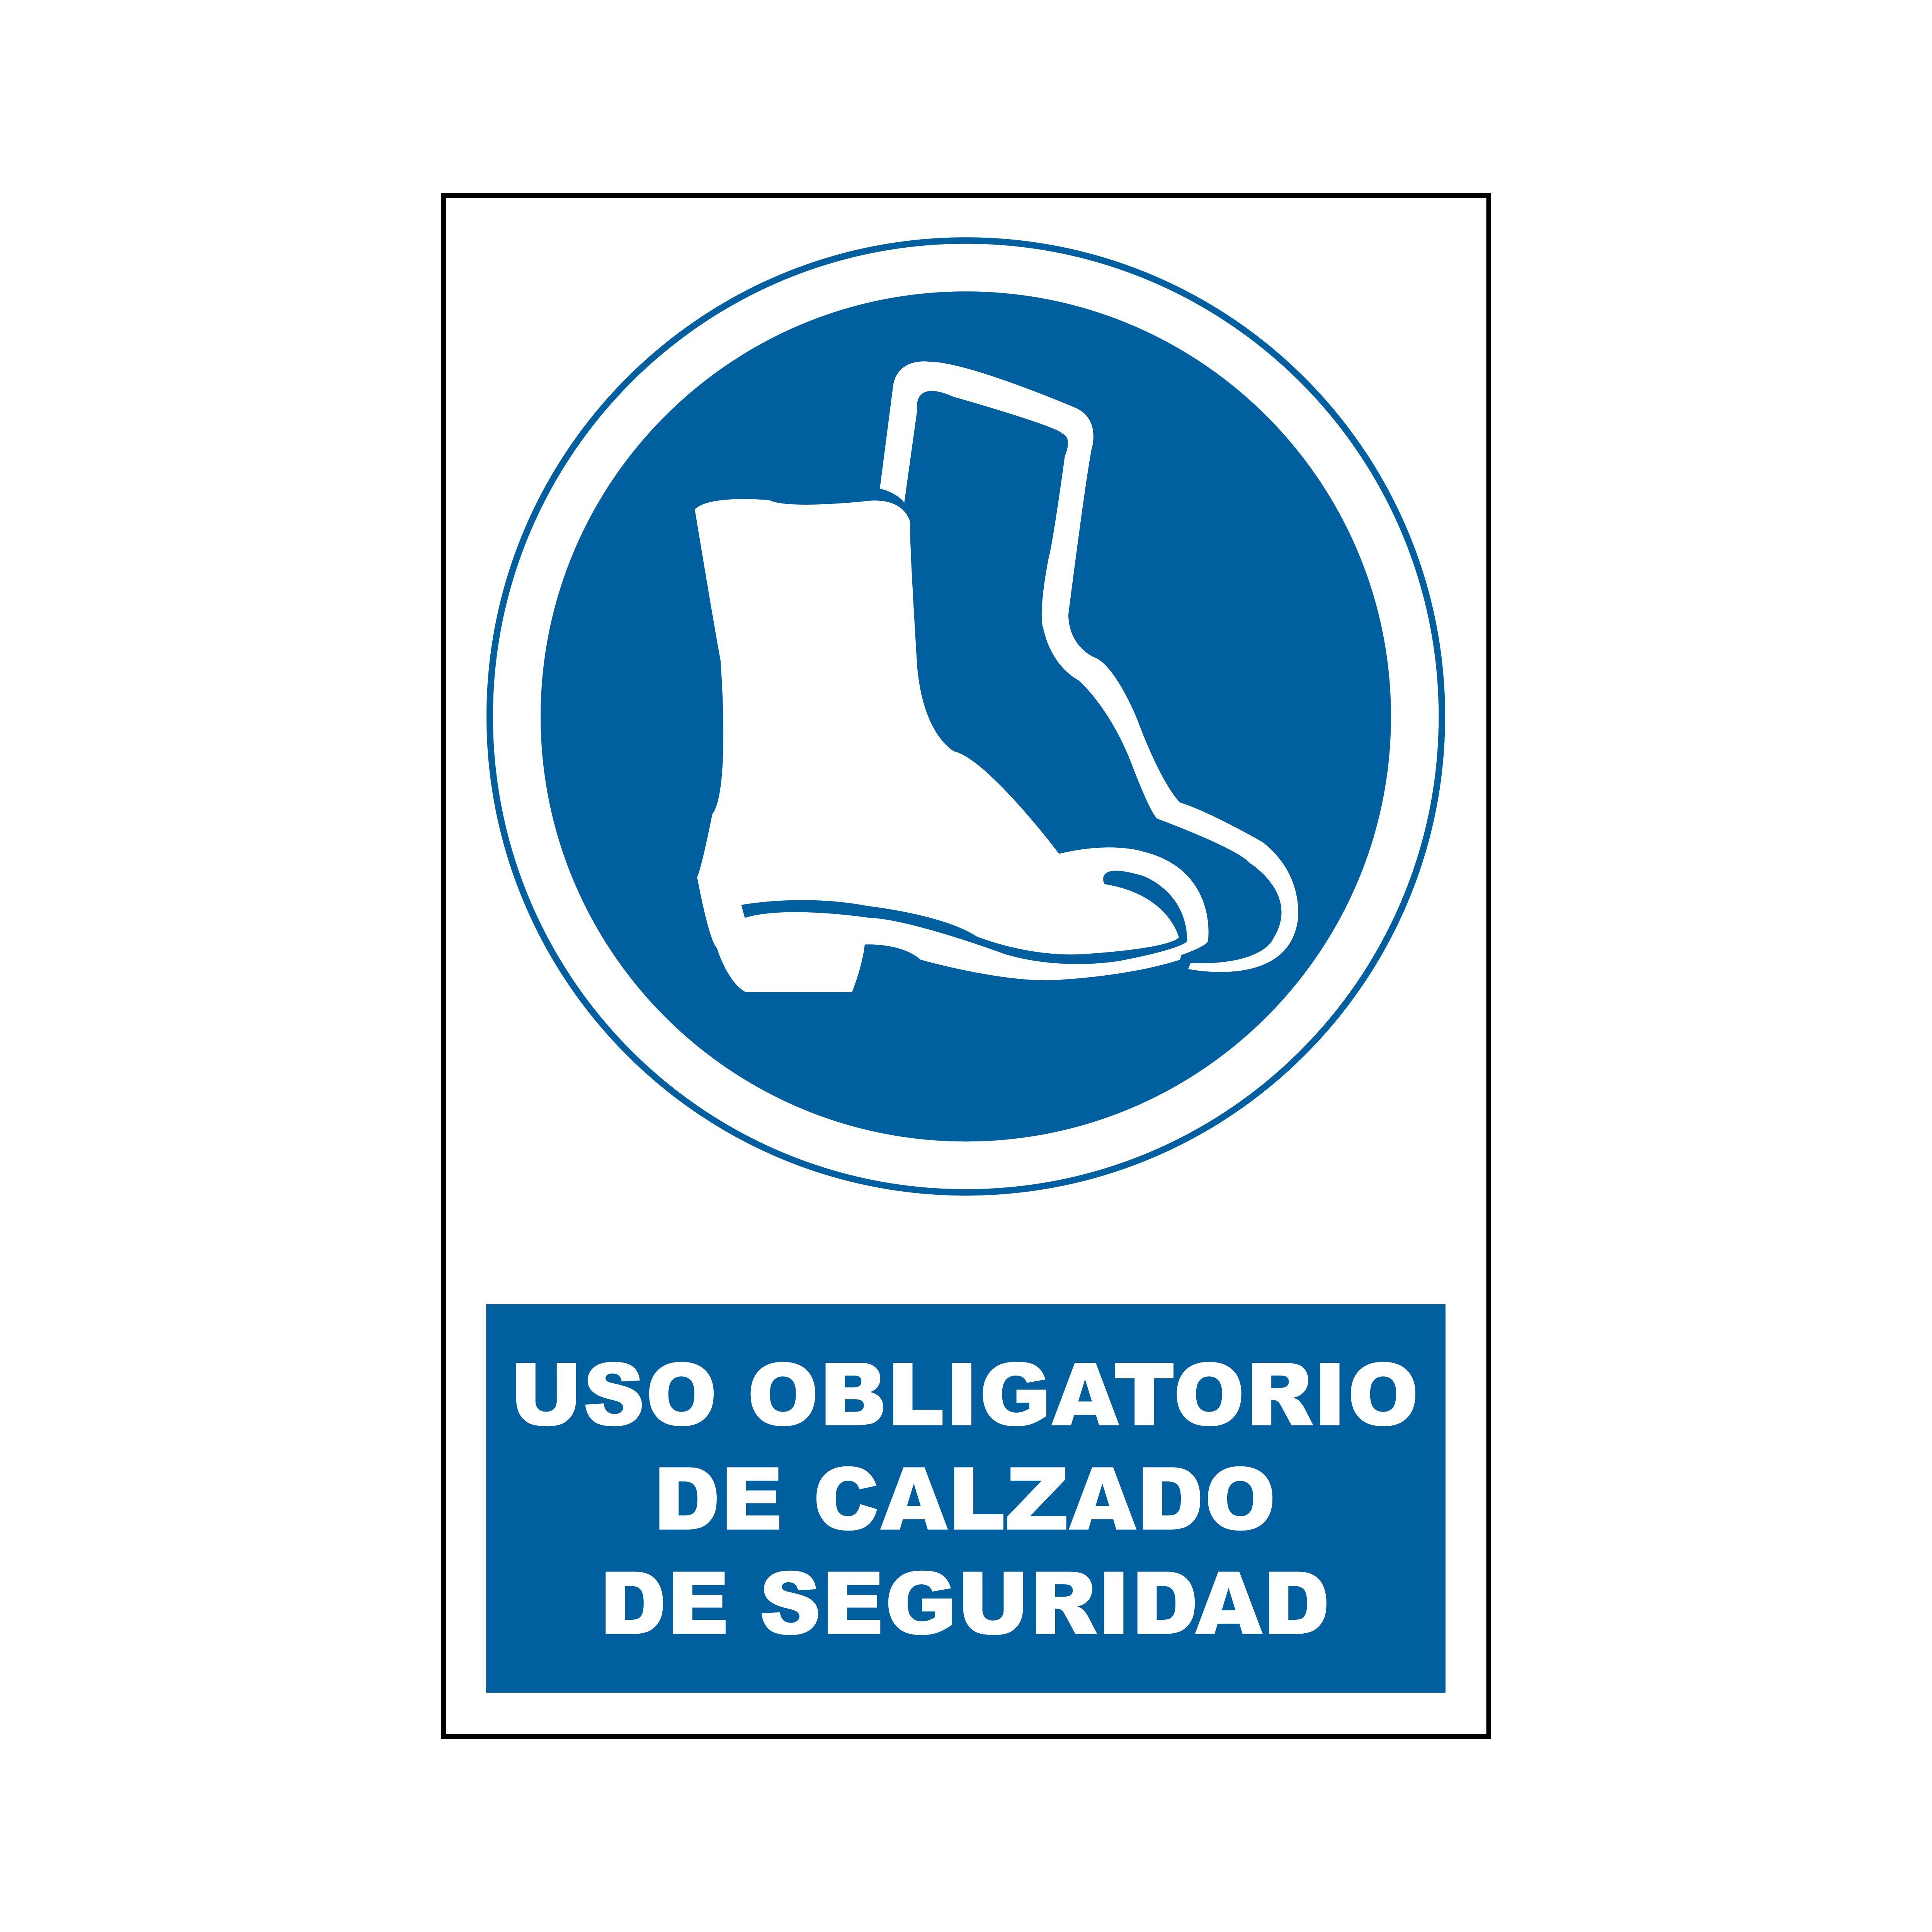 Señal de obligación con pictograma: Calzado de Protección, texto en Español, autoadhesivo, 170mm x 250 mm